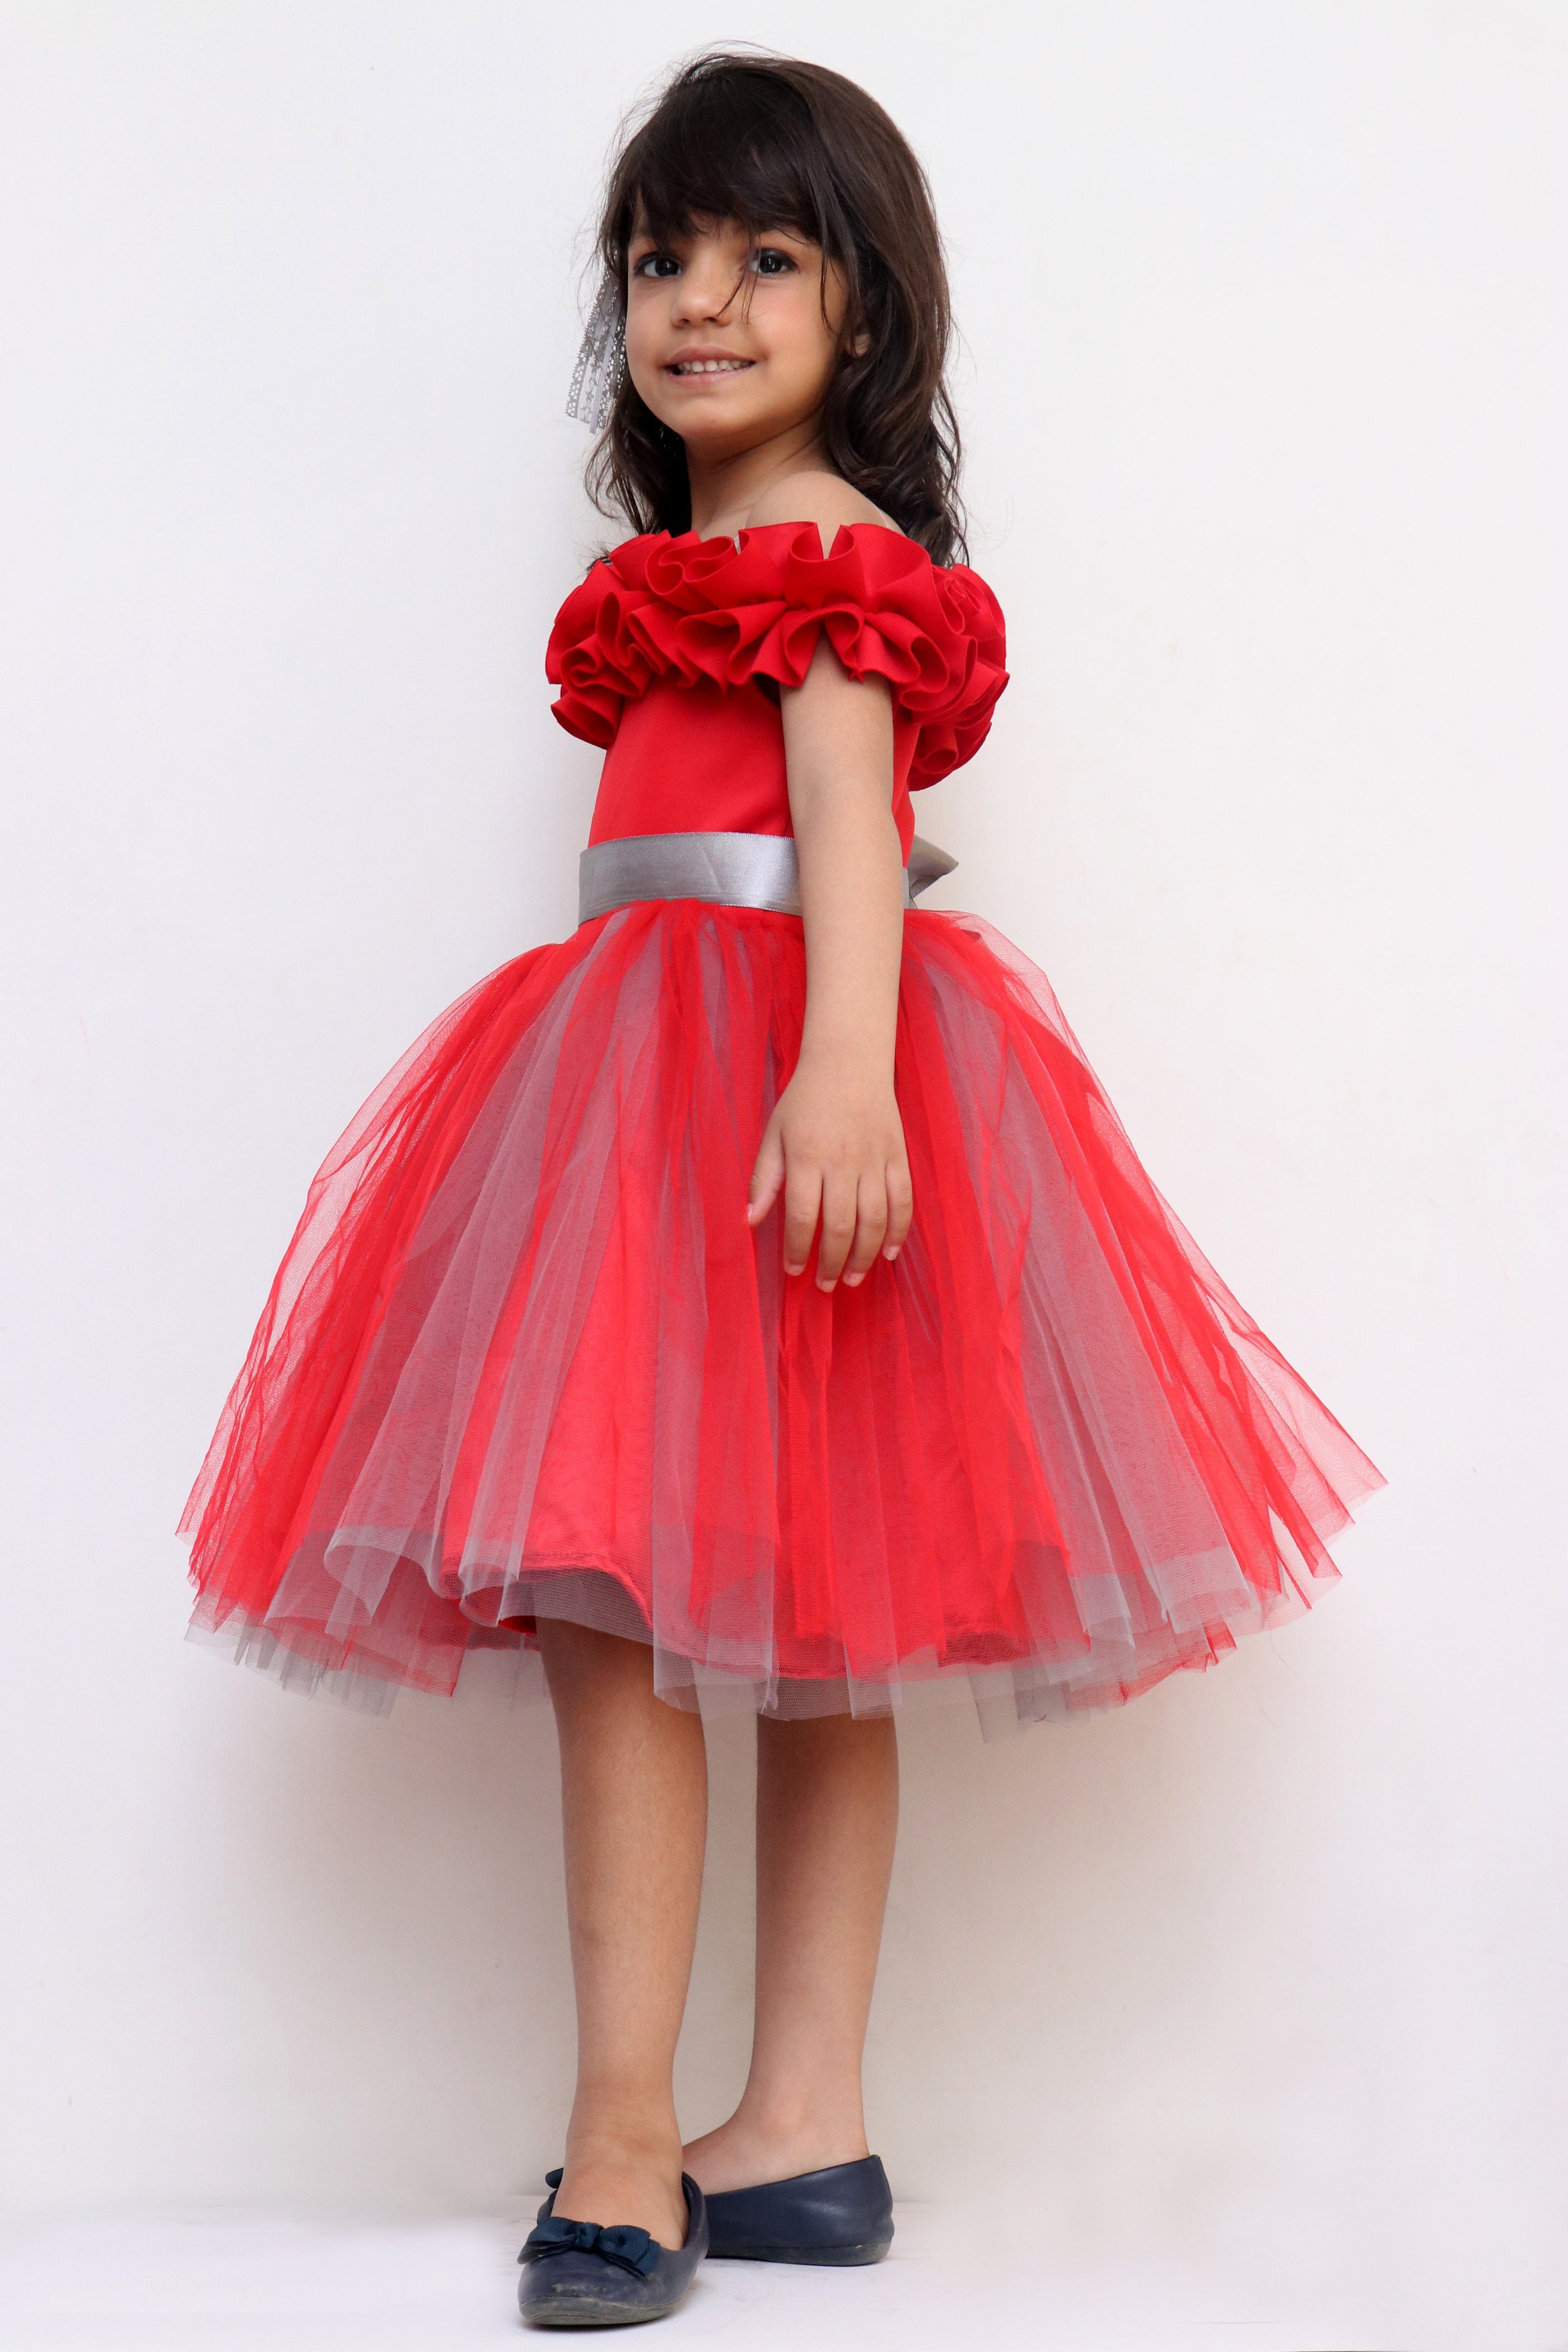 New Trend Dress for Girls - Stylish Kids Dress | One Friday World